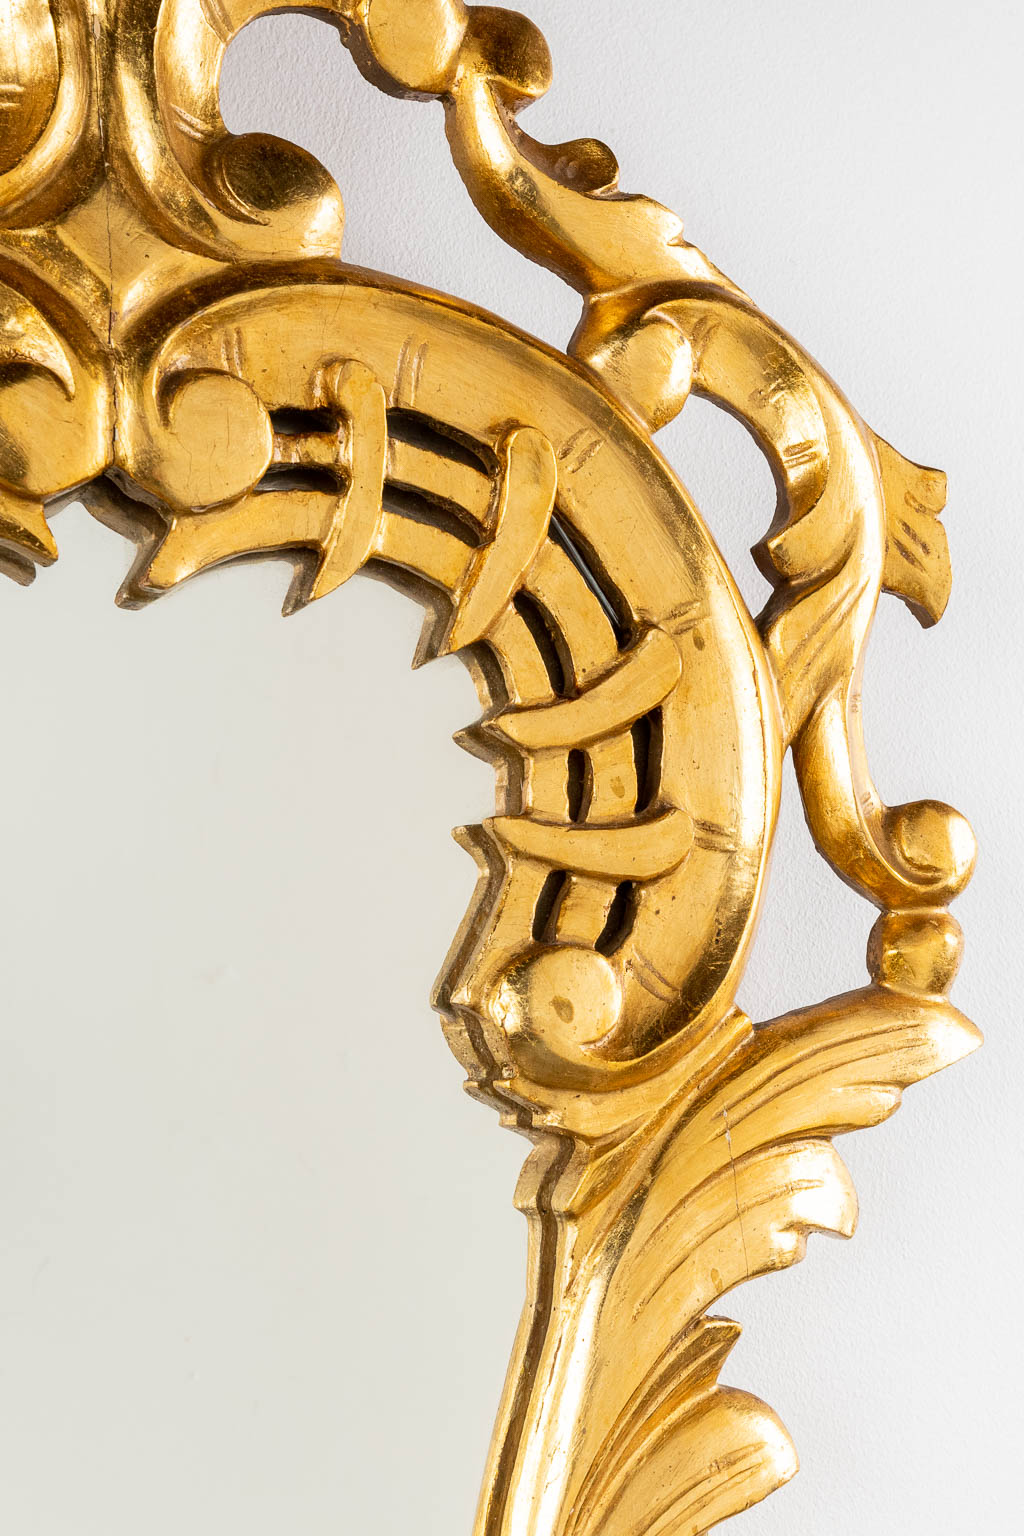 An antique mirror, sculptured and gilt wood, Roccoco style. Circa 1900. (W:42 x H:82 cm)